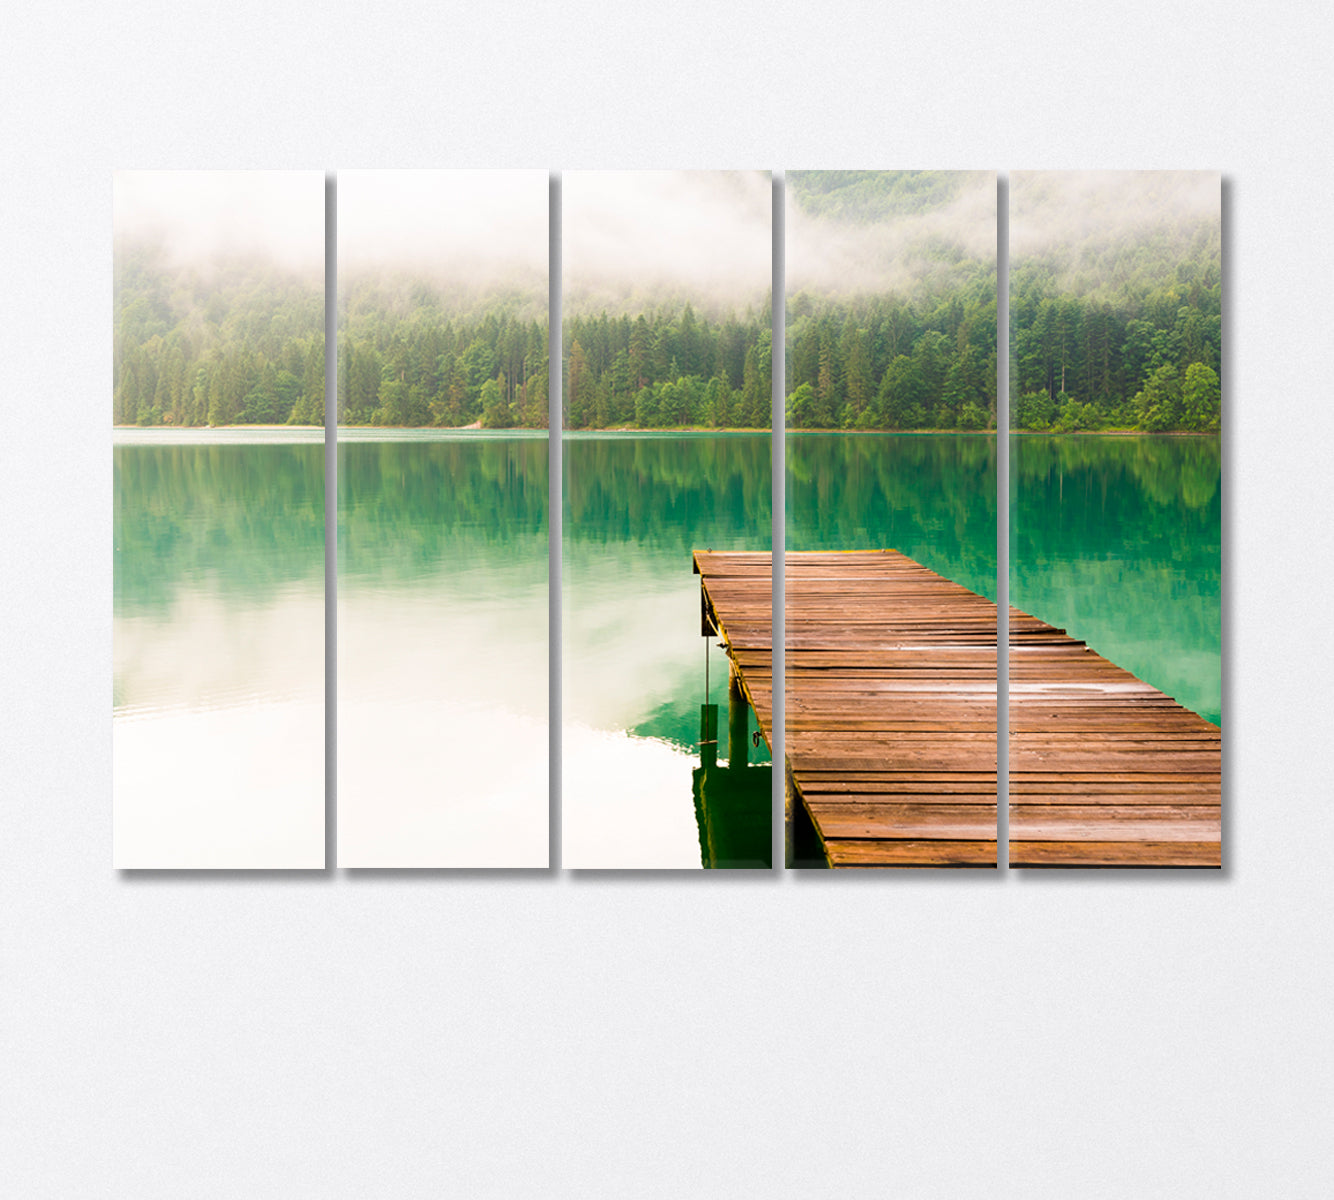 Foggy Morning Pier at Lake Canvas Print-Canvas Print-CetArt-5 Panels-36x24 inches-CetArt